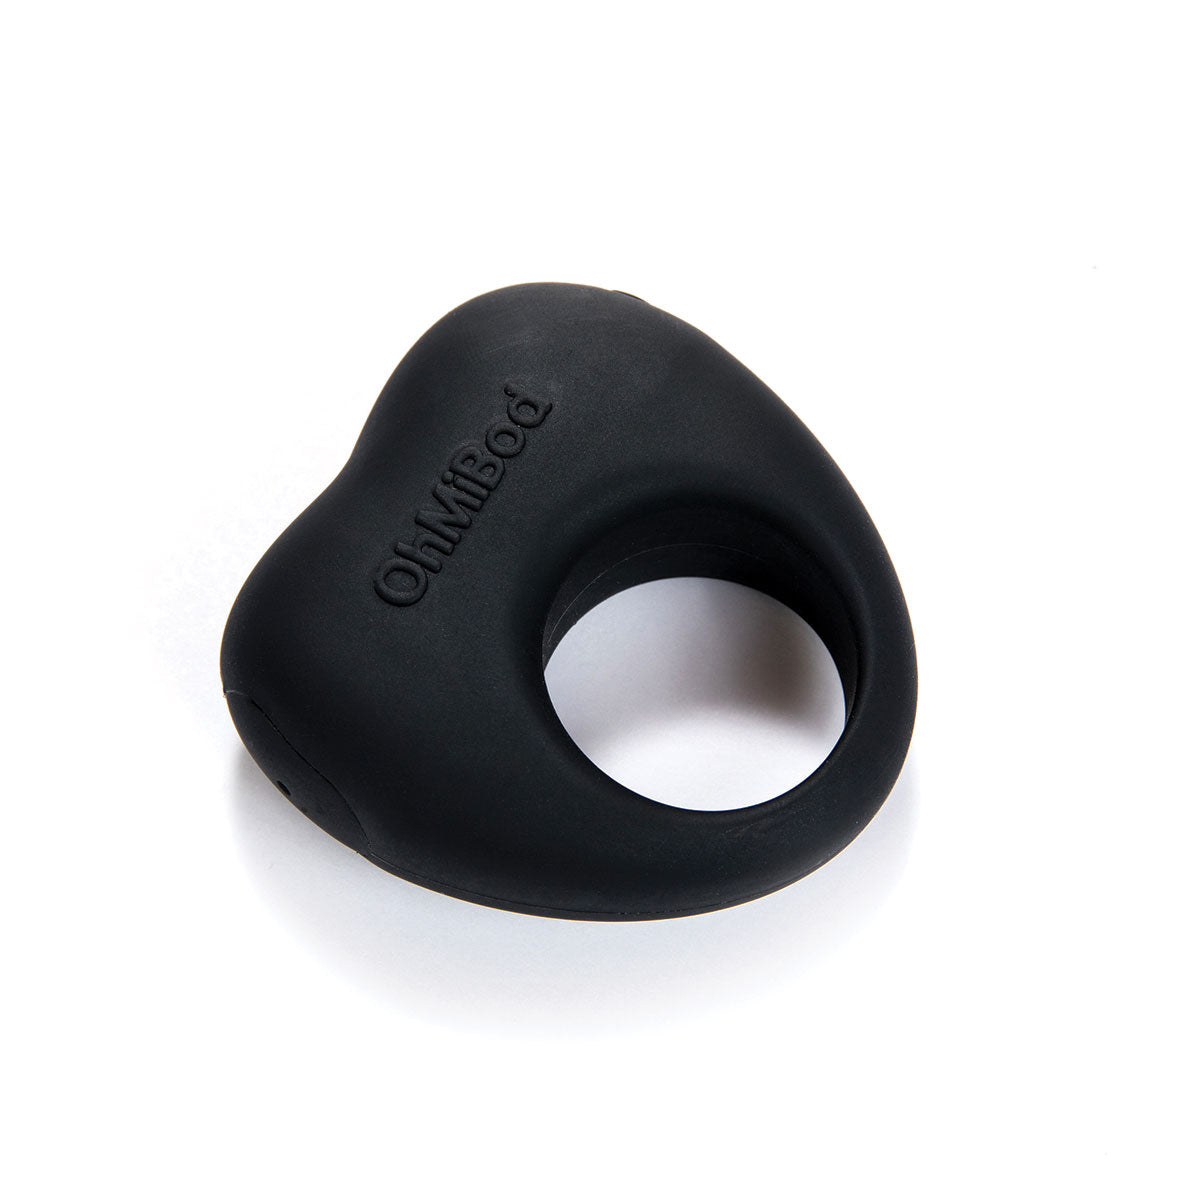 OhMiBod Share Vibrating Couple's Cock Ring